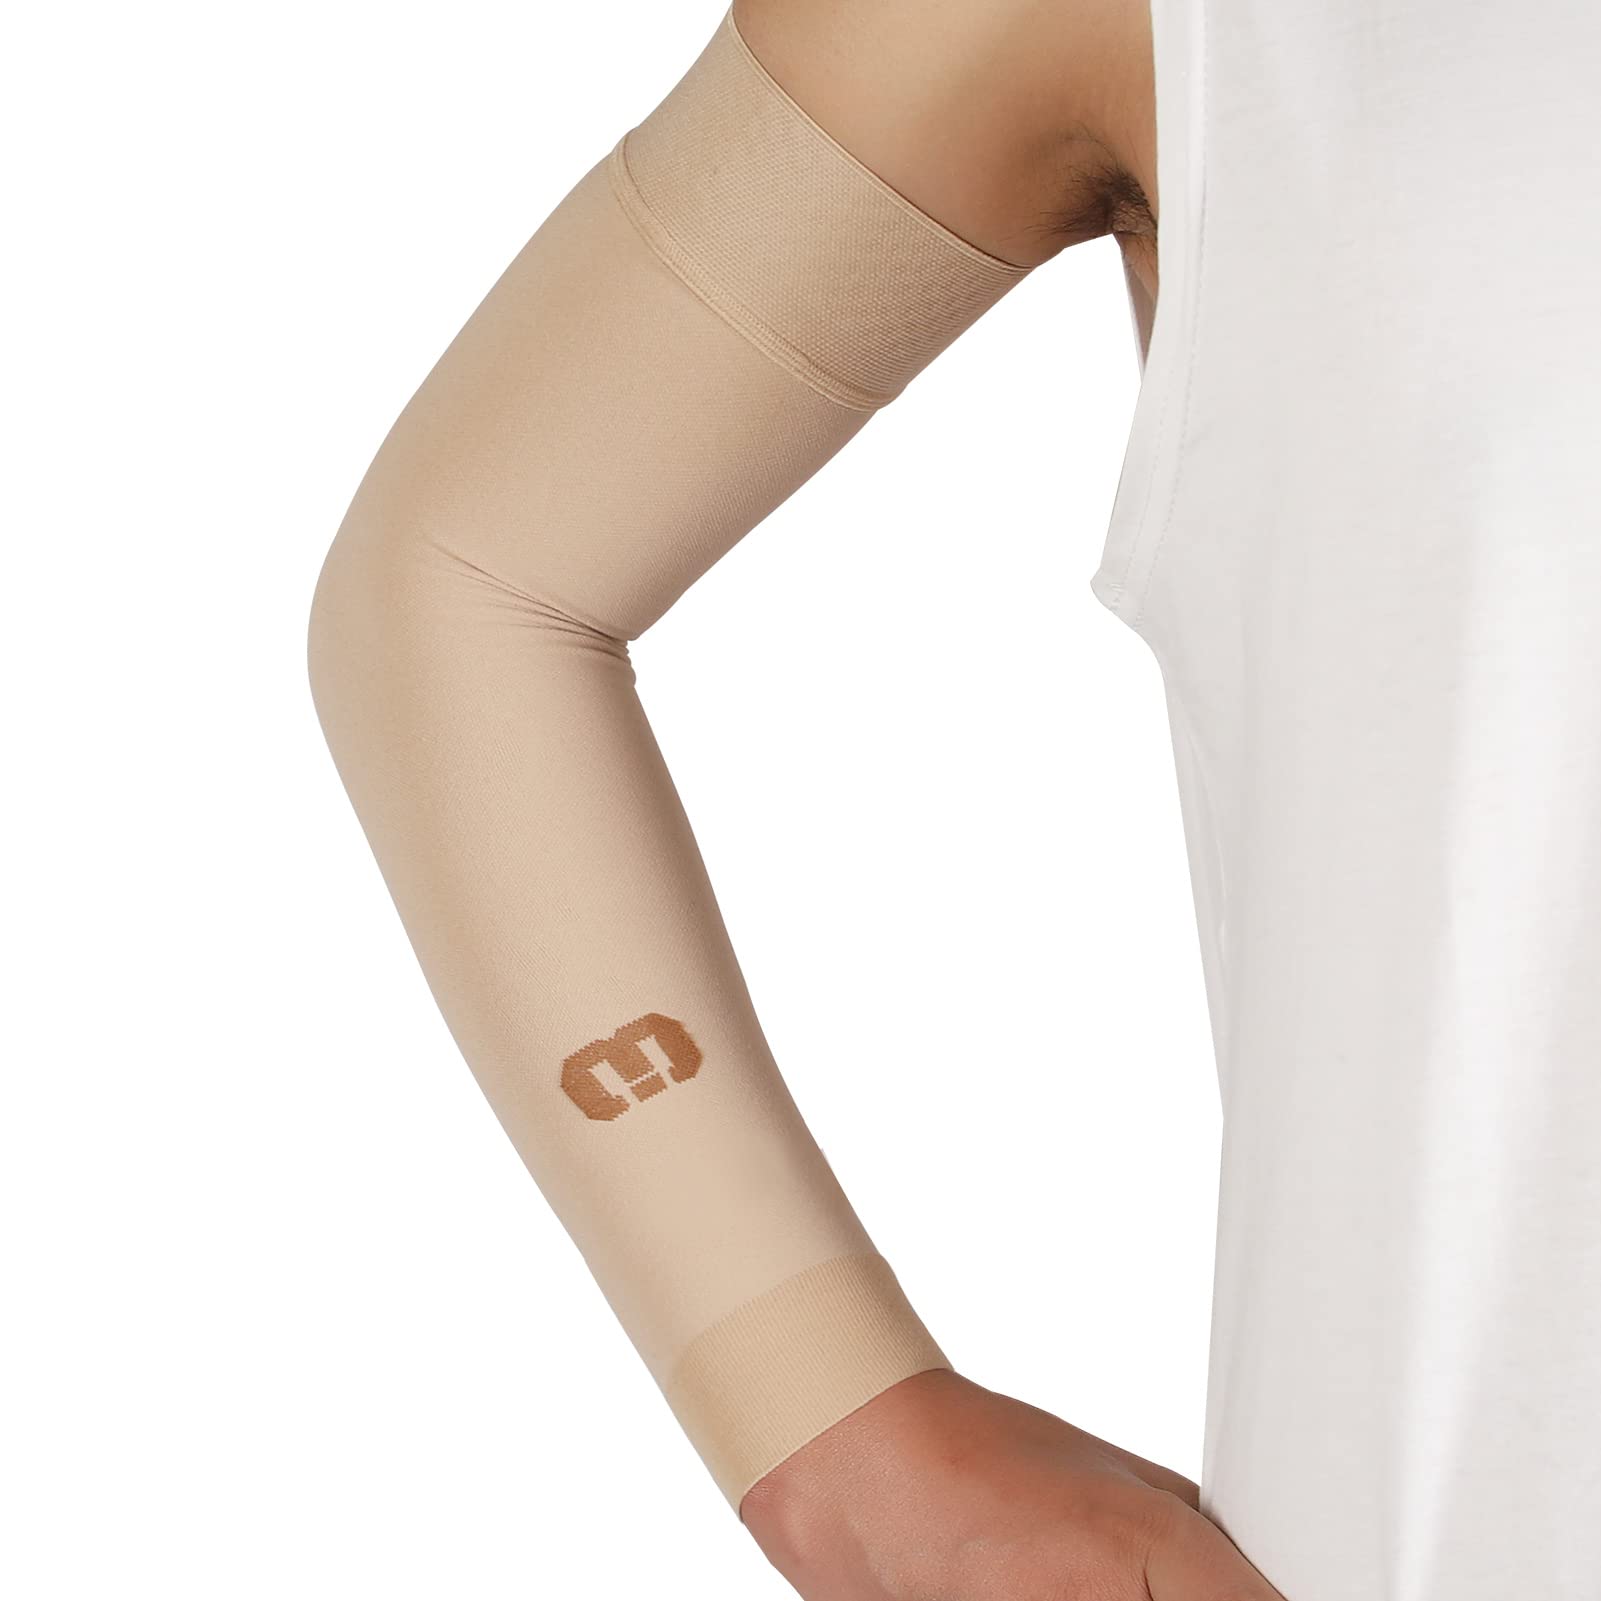 Lymphedema Arm Sleeve Gauntlet  20-30 mmHg Compression Armsleeve